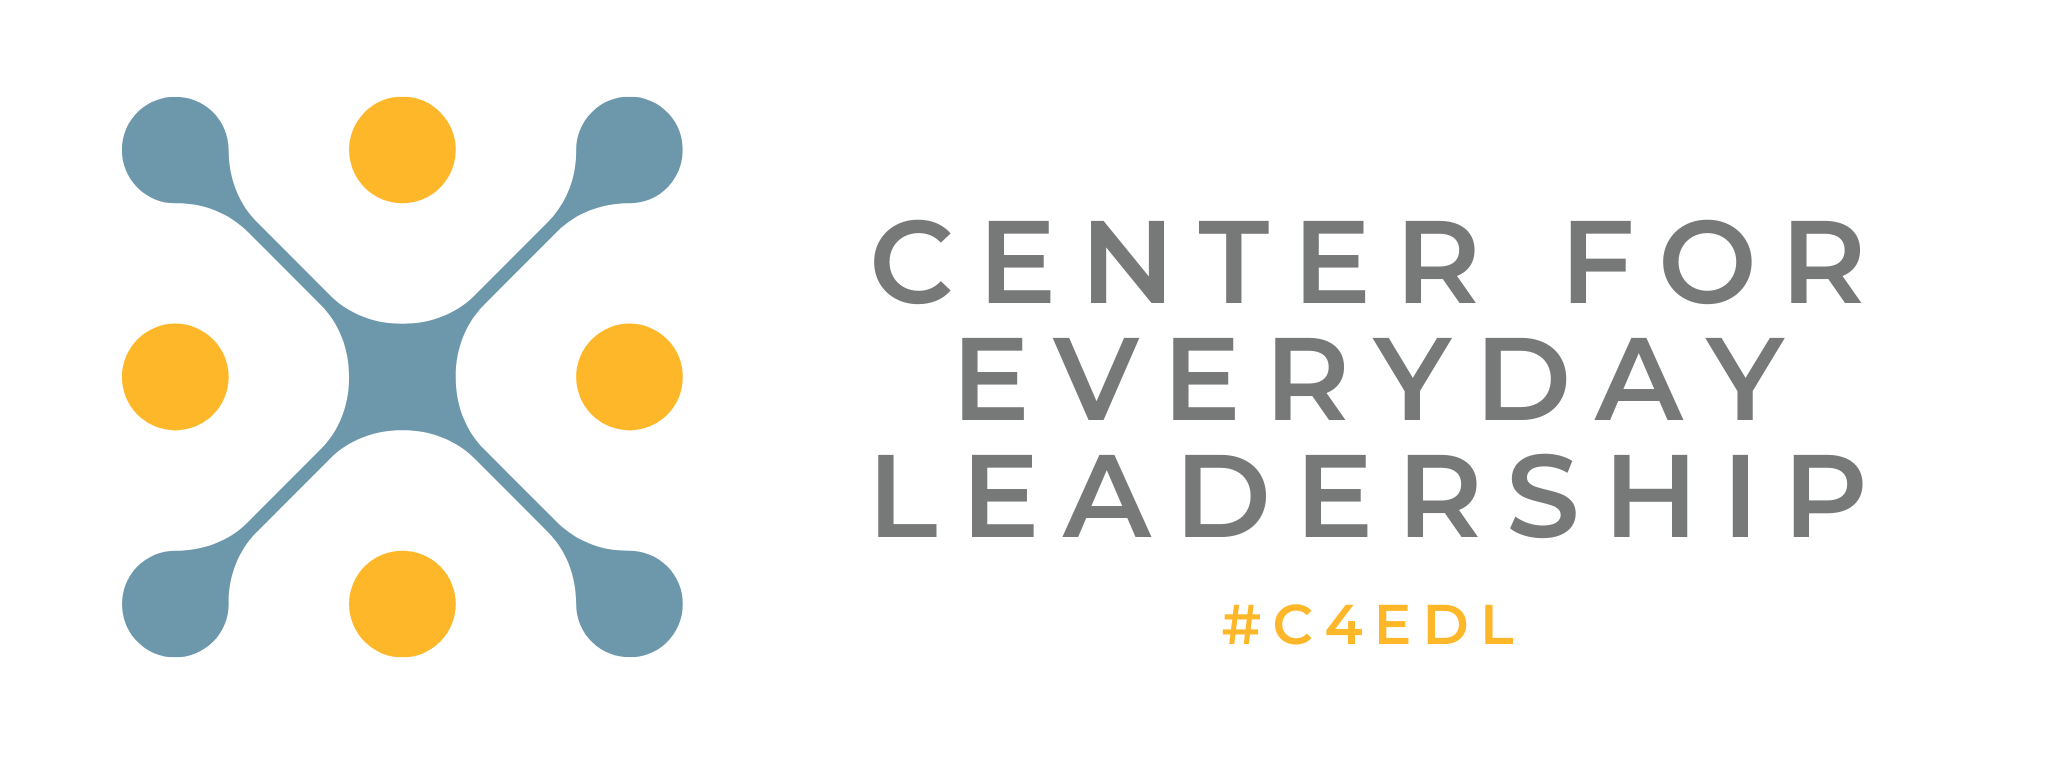 The Center for Everyday Leadership logo